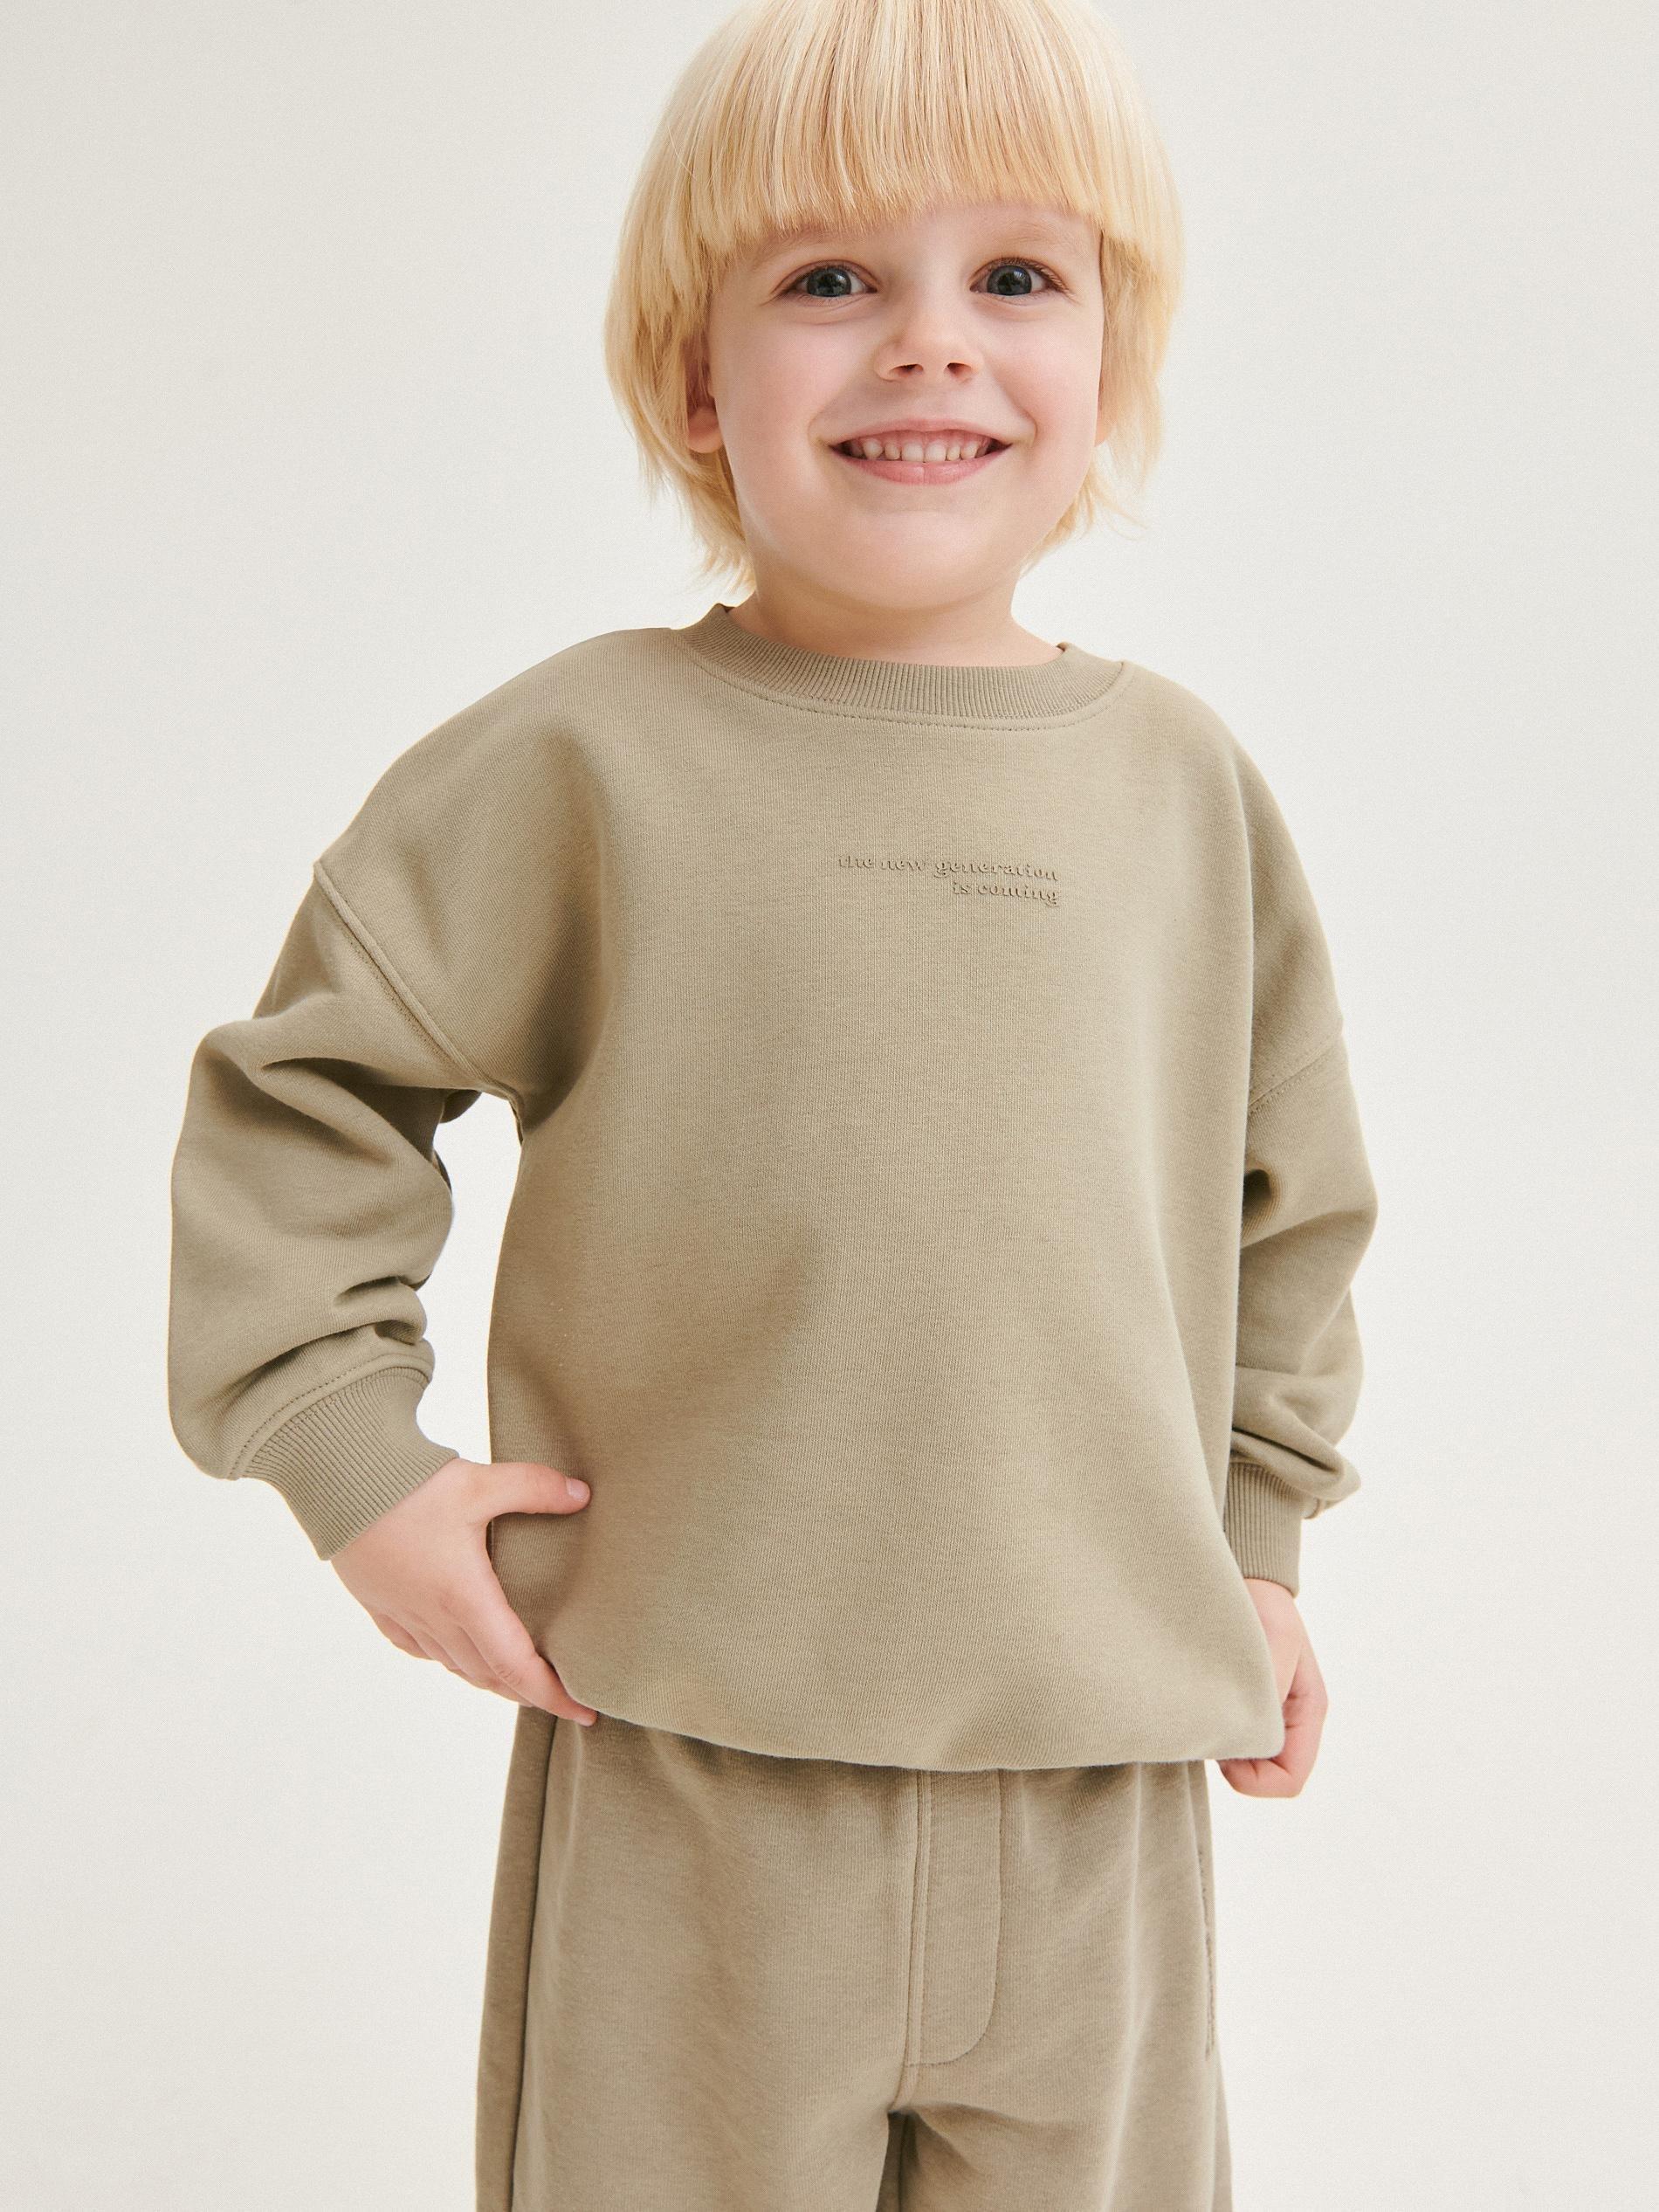 Reserved - Khaki Printed Cotton Sweatshirt, Kids Boys